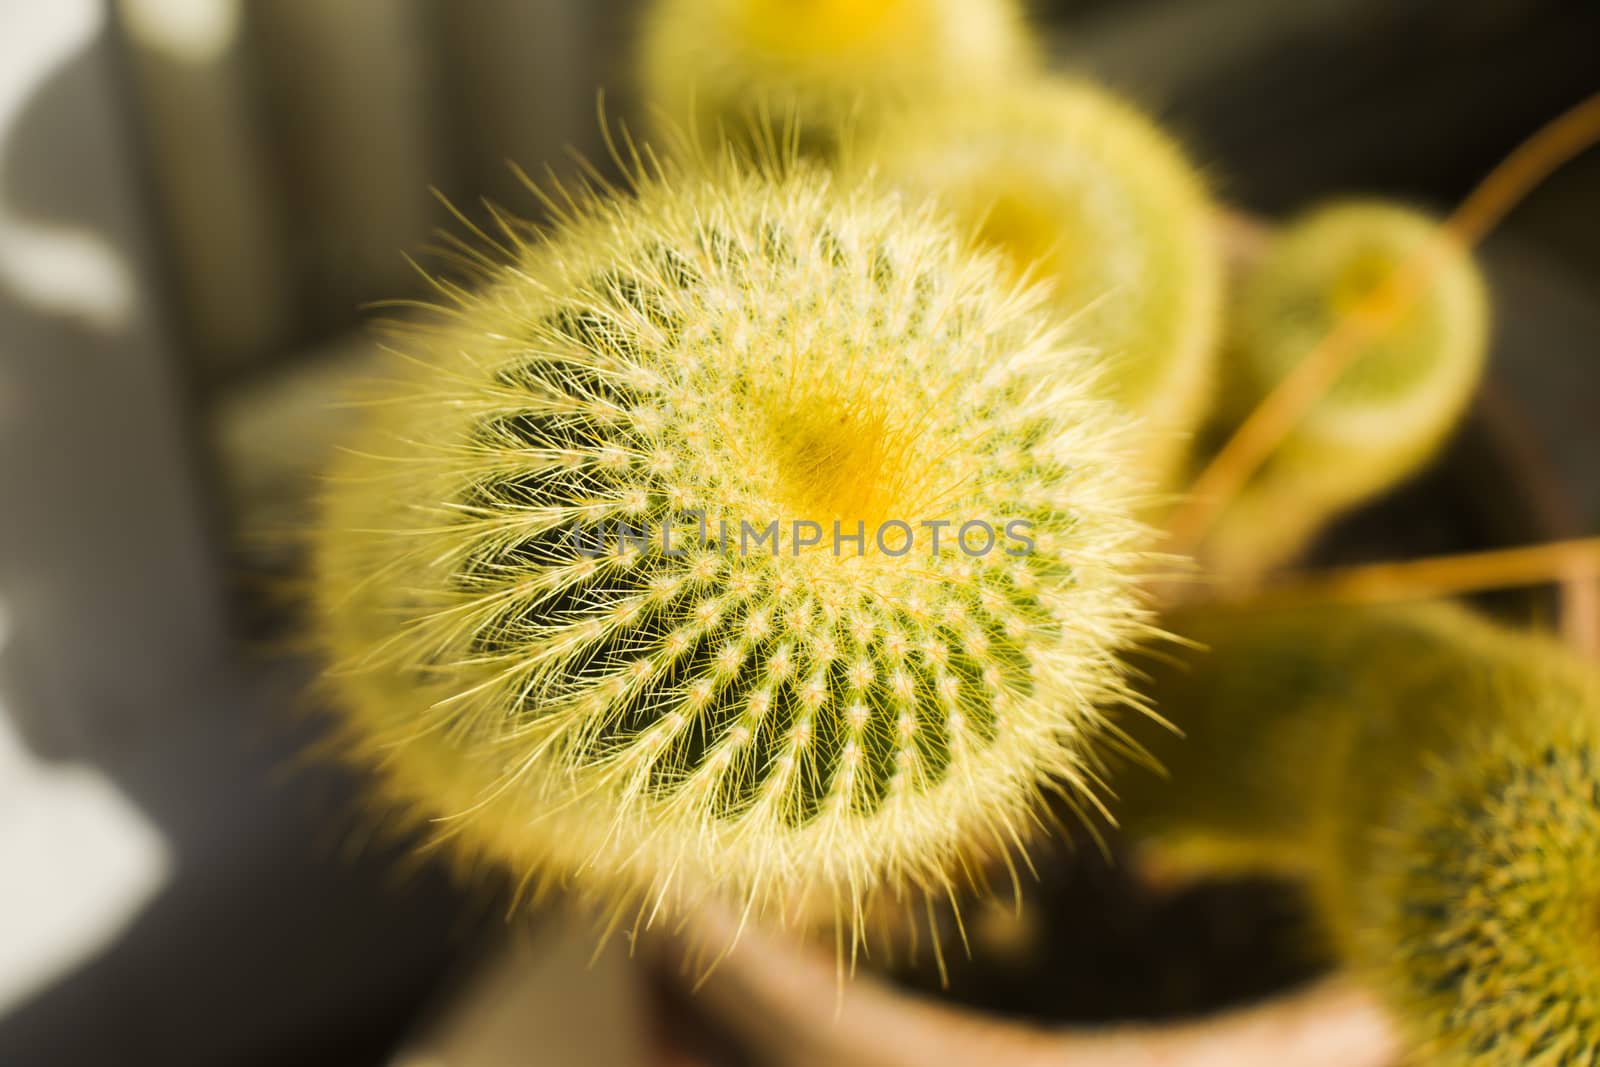 Cactus close-up and macro, yellow cactus, blur and bokeh background.